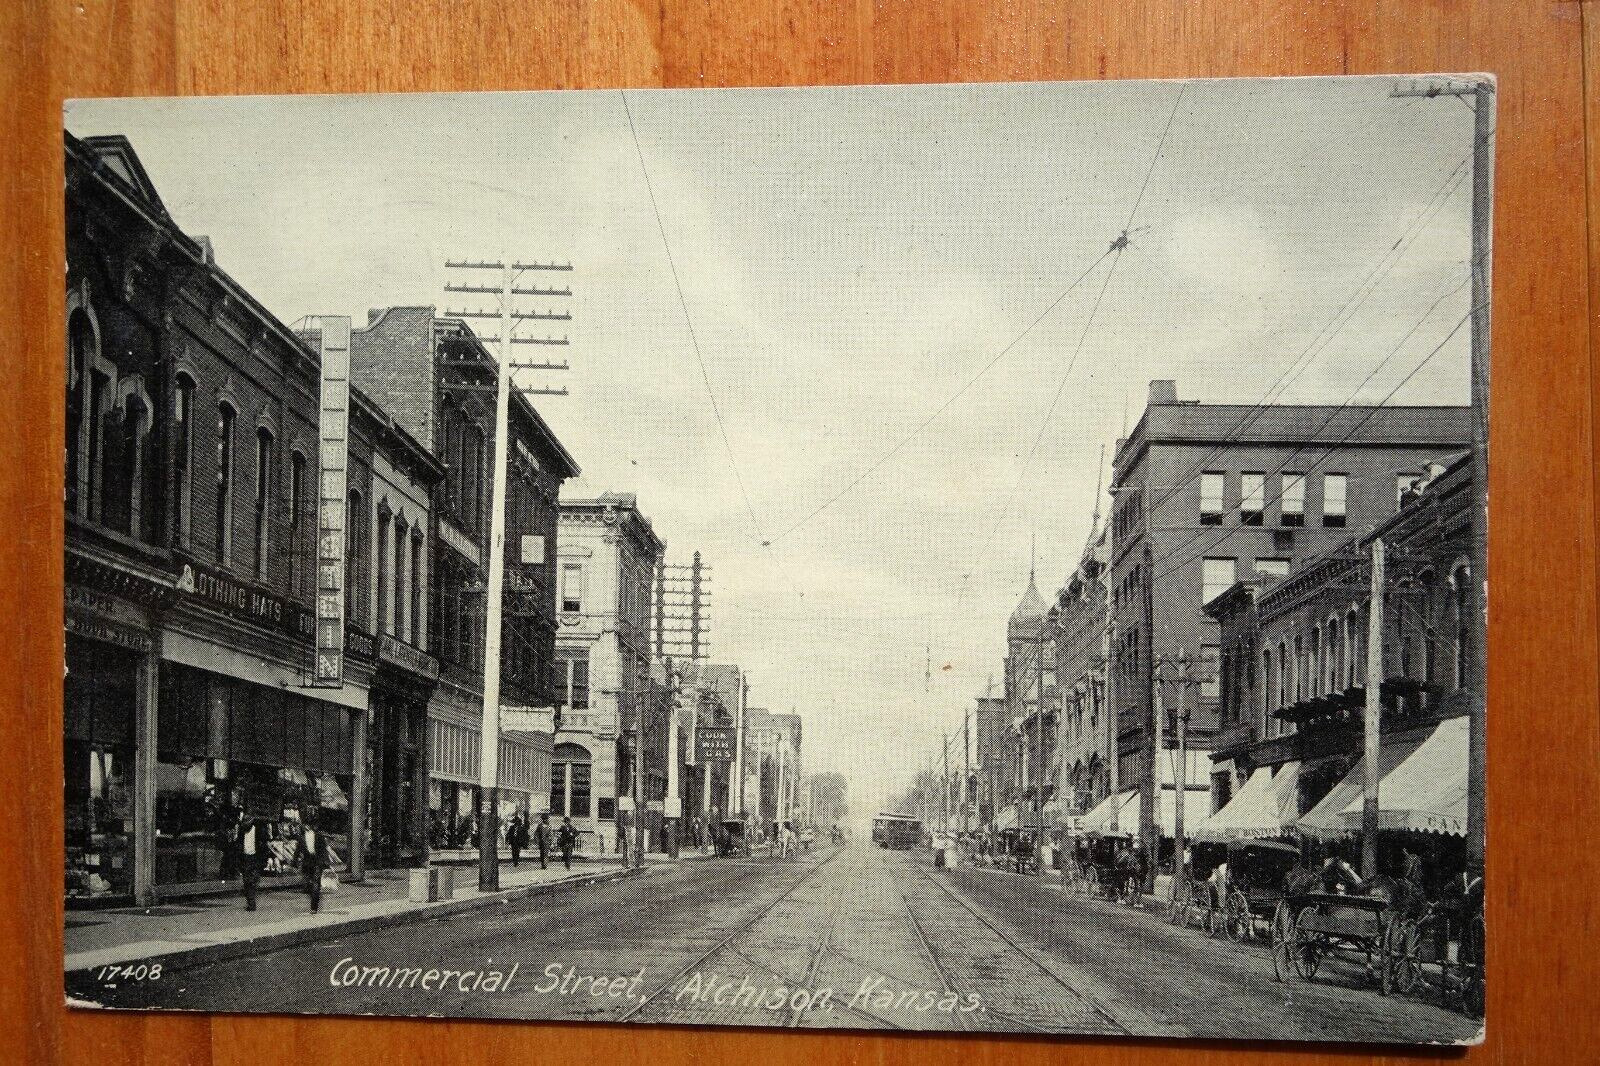 Commercial Street, Atchison KS KANSAS postcard p/u 1907